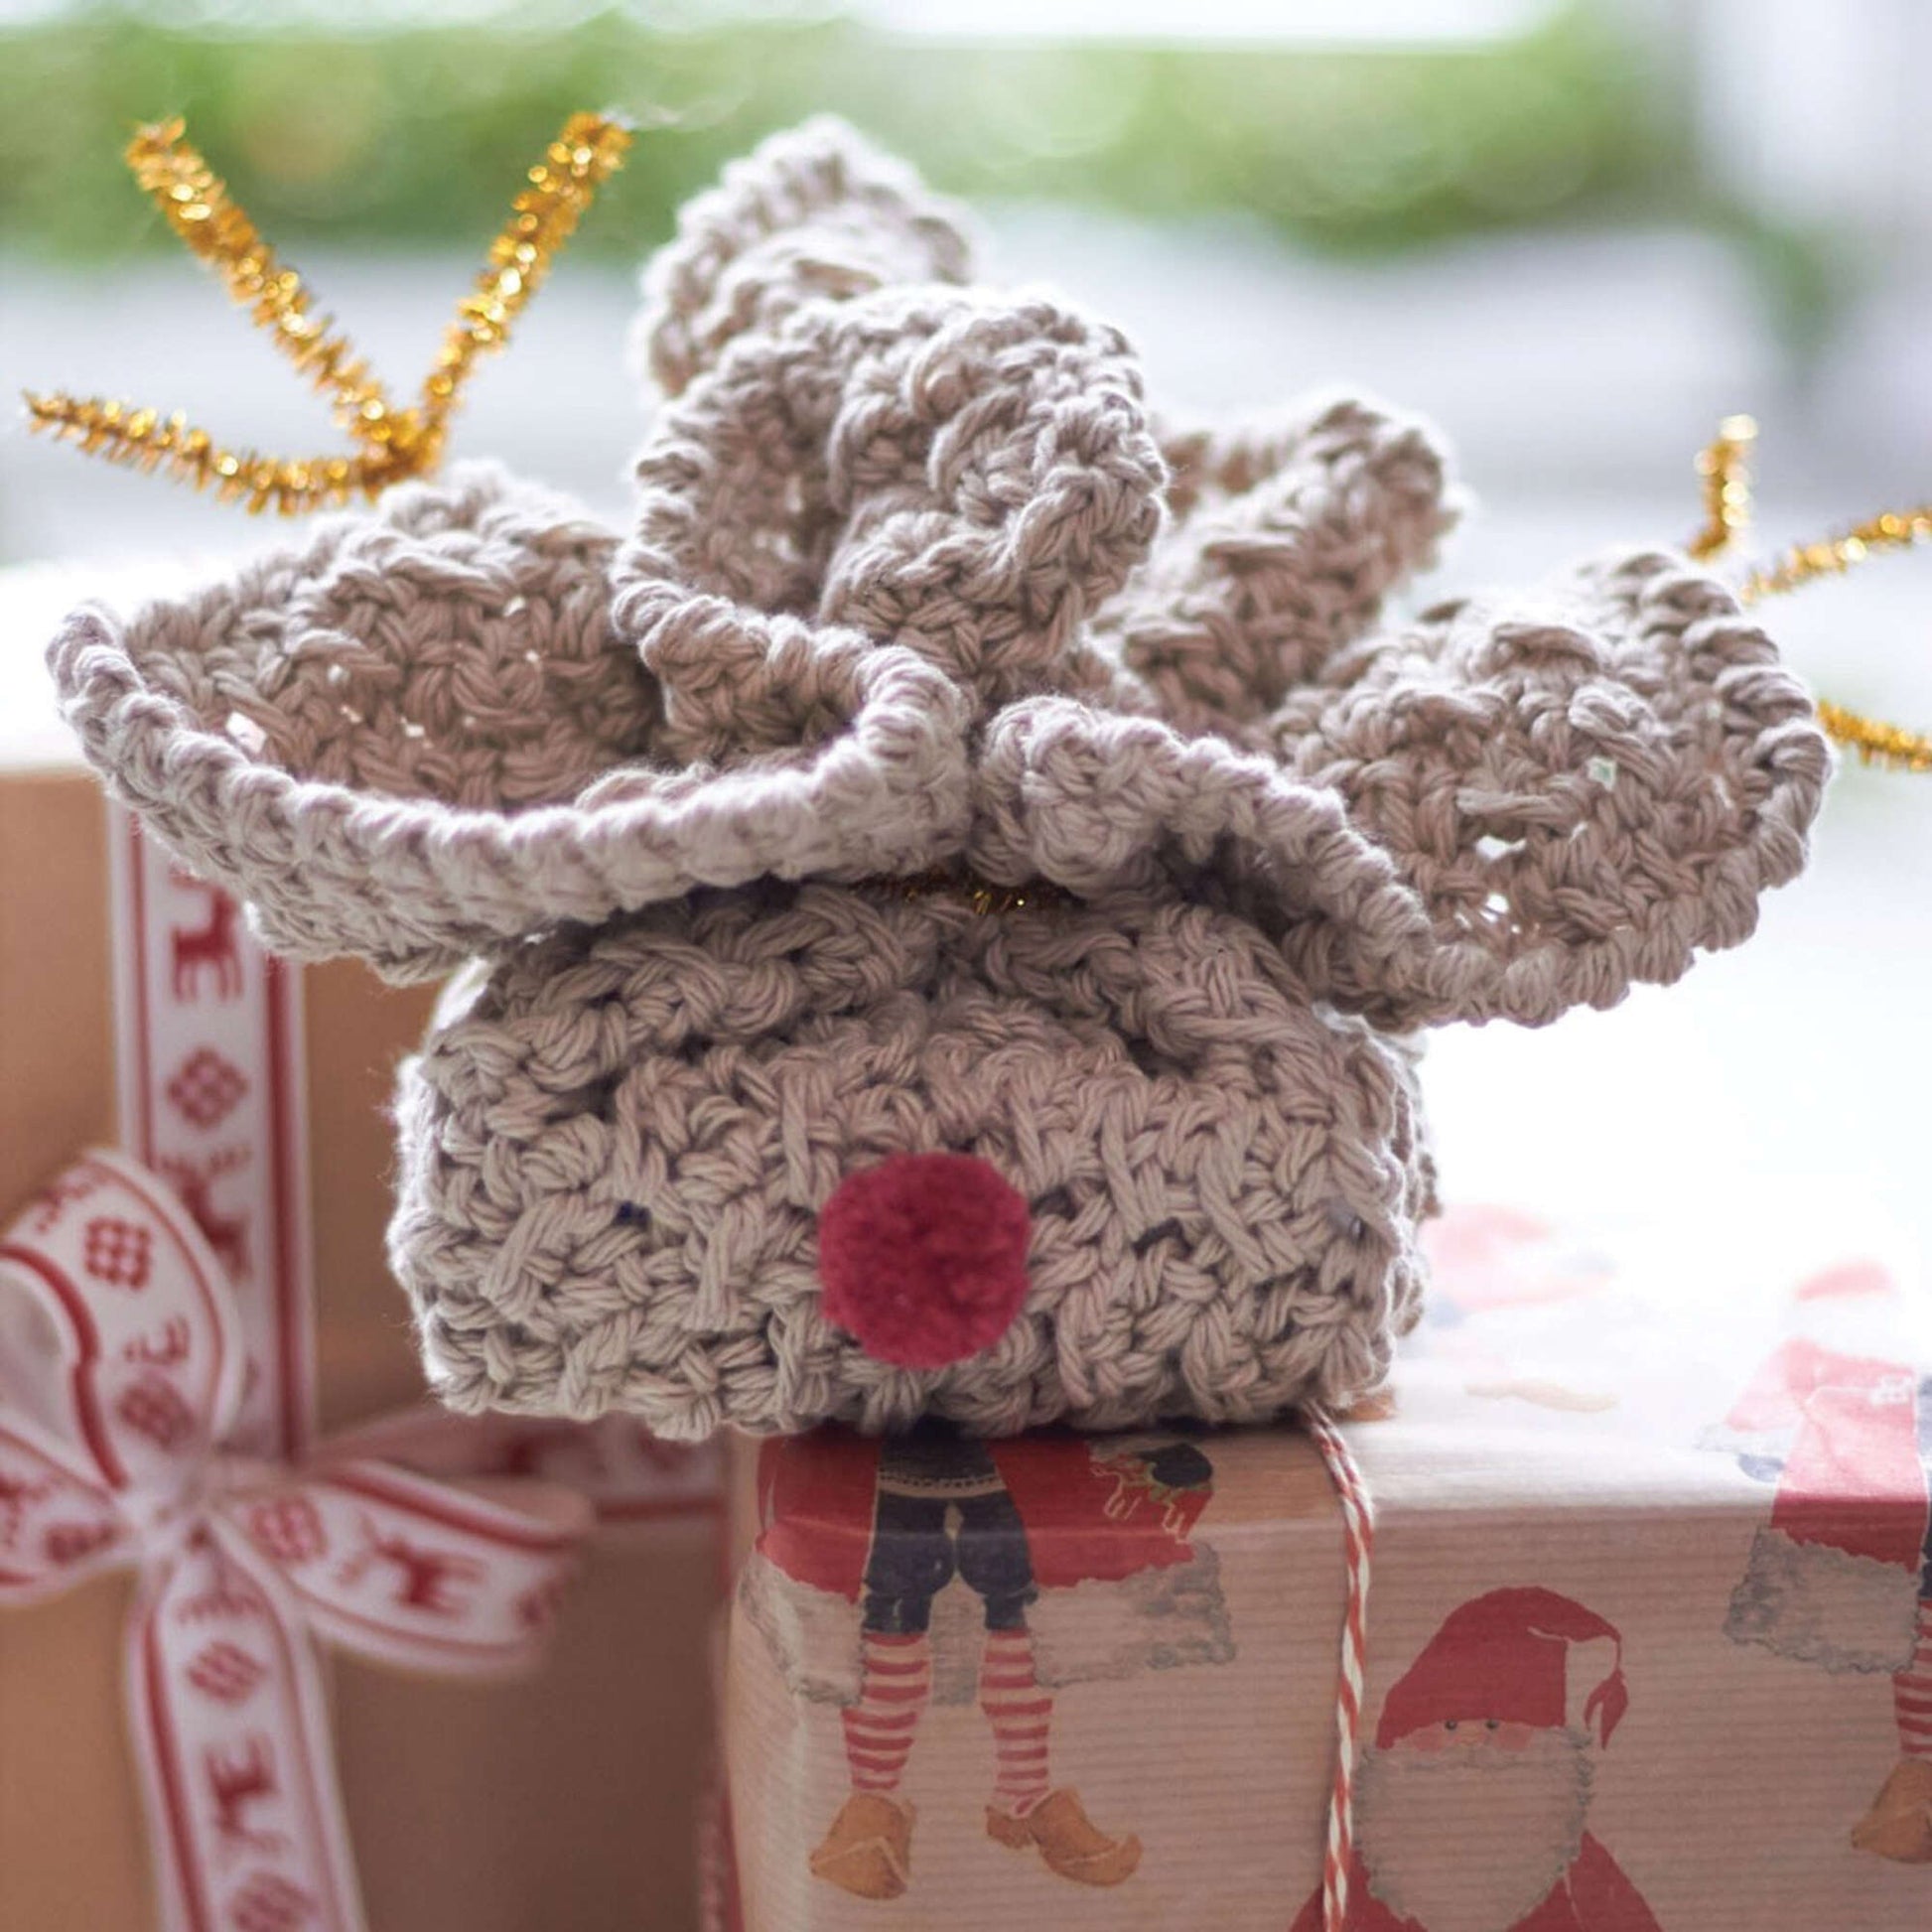 Washcloth Reindeer Christmas Craft